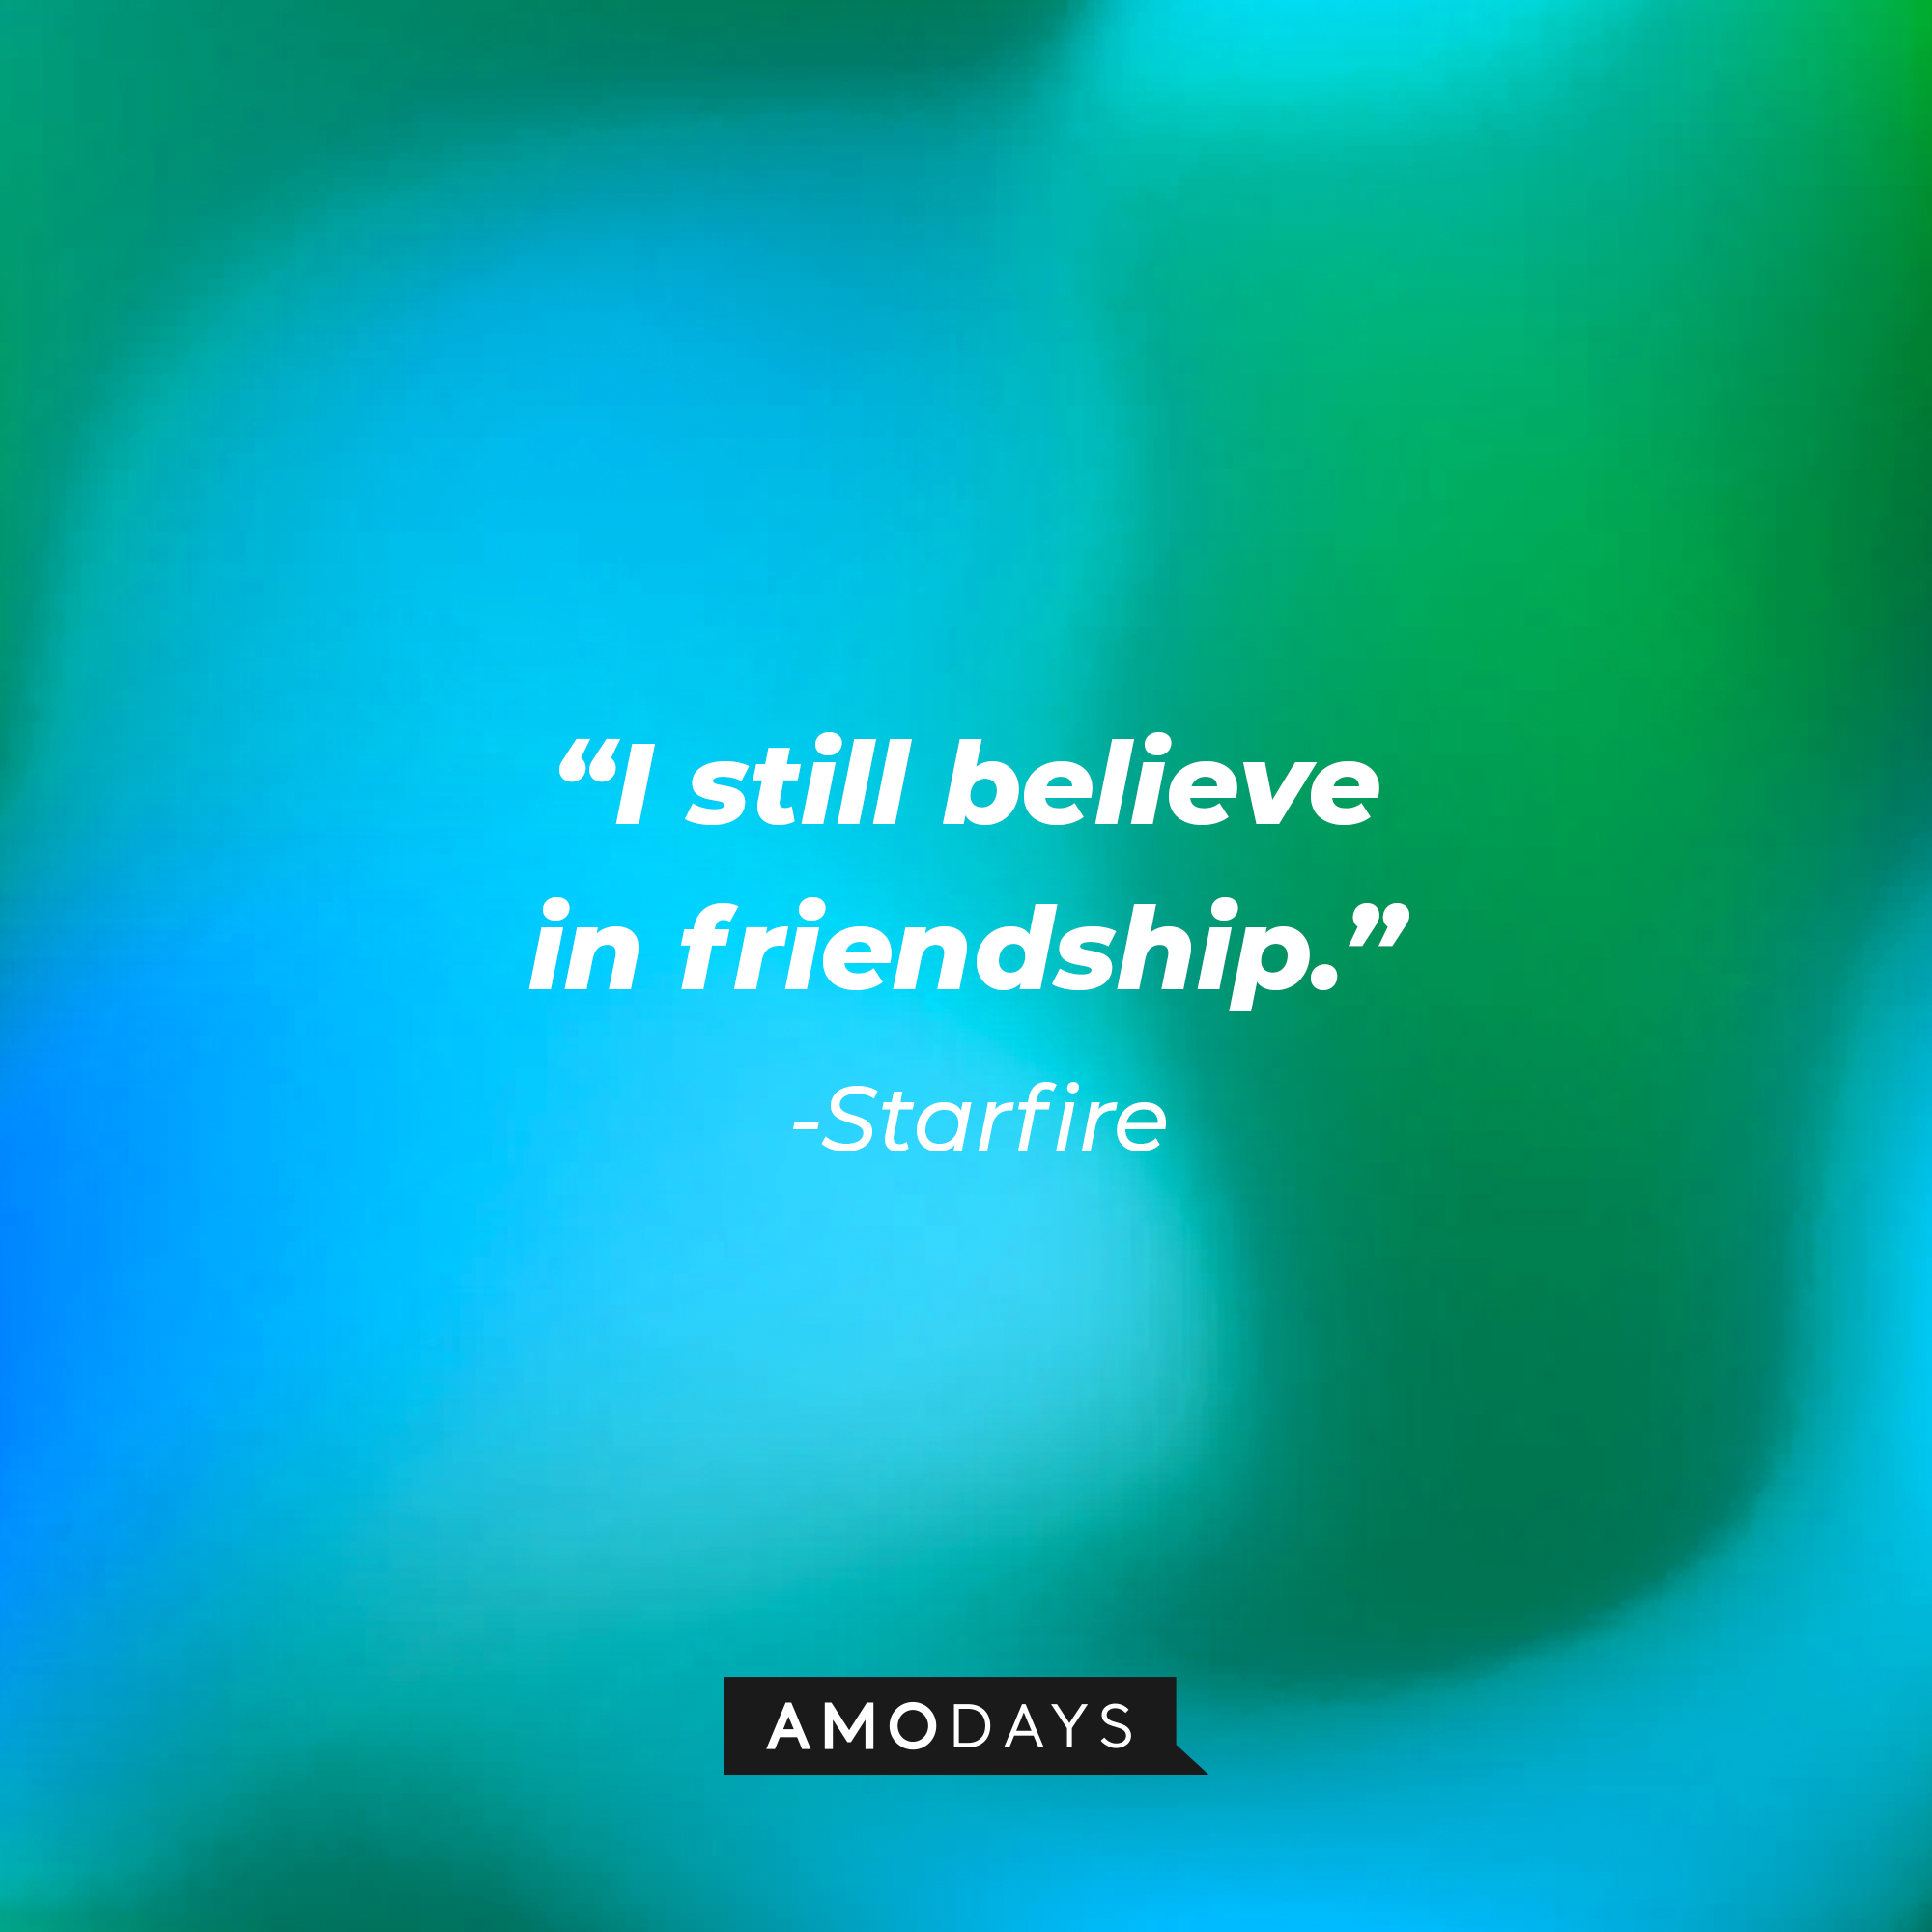 Starfire’s quote: "I still believe in friendship” | Source: AmoDays